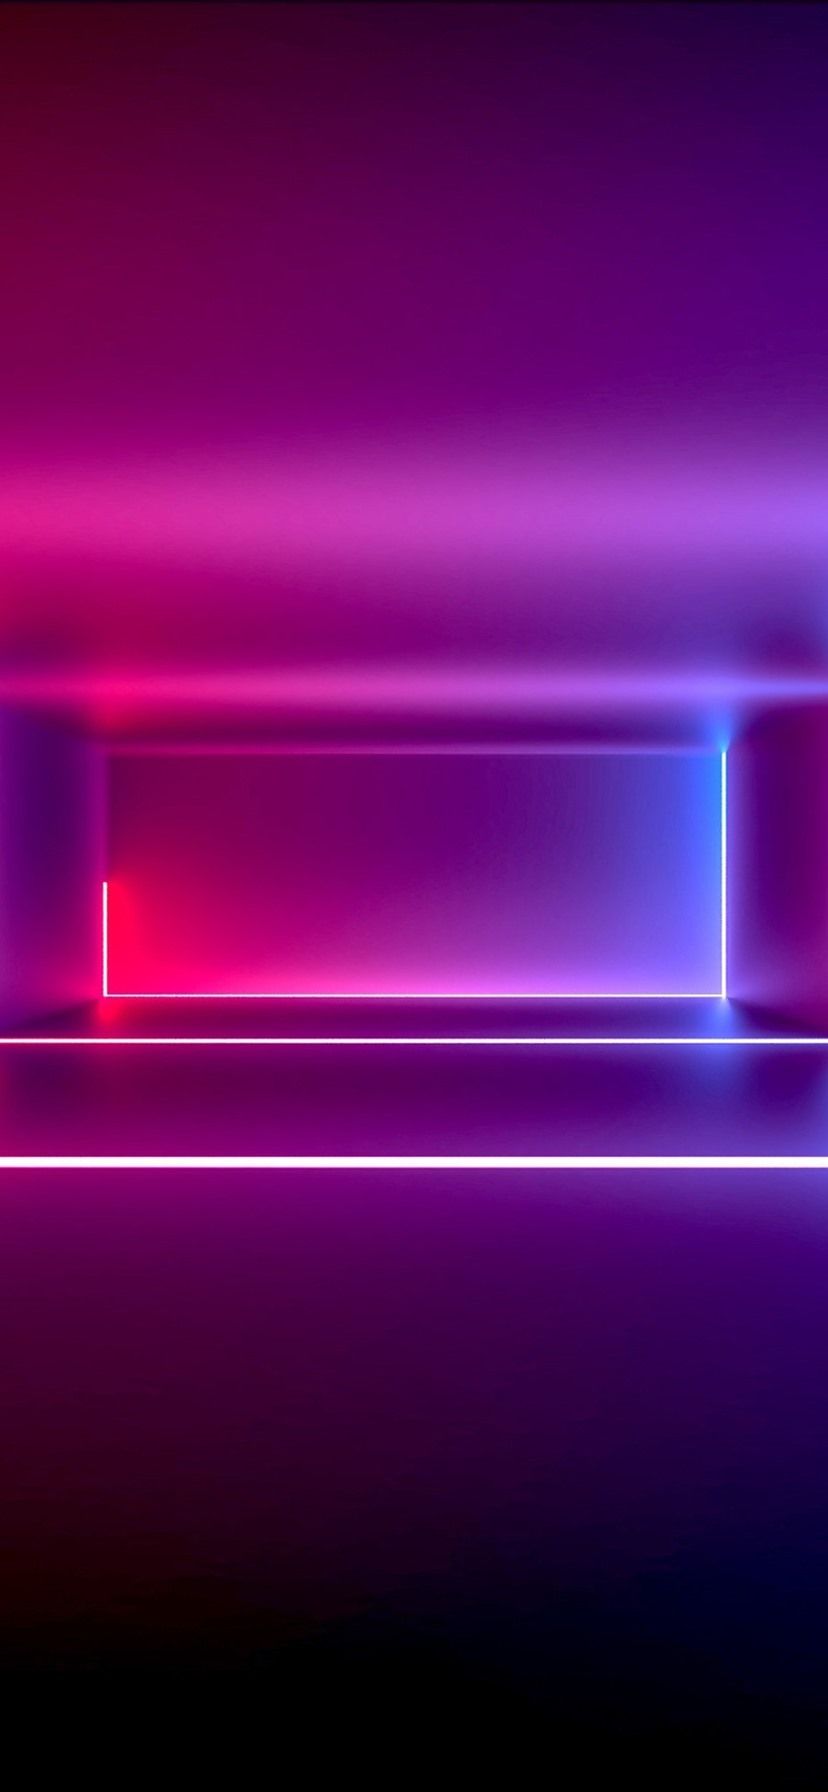 Room, neon light, purple style, abstract design 828x1792 iPhone 11